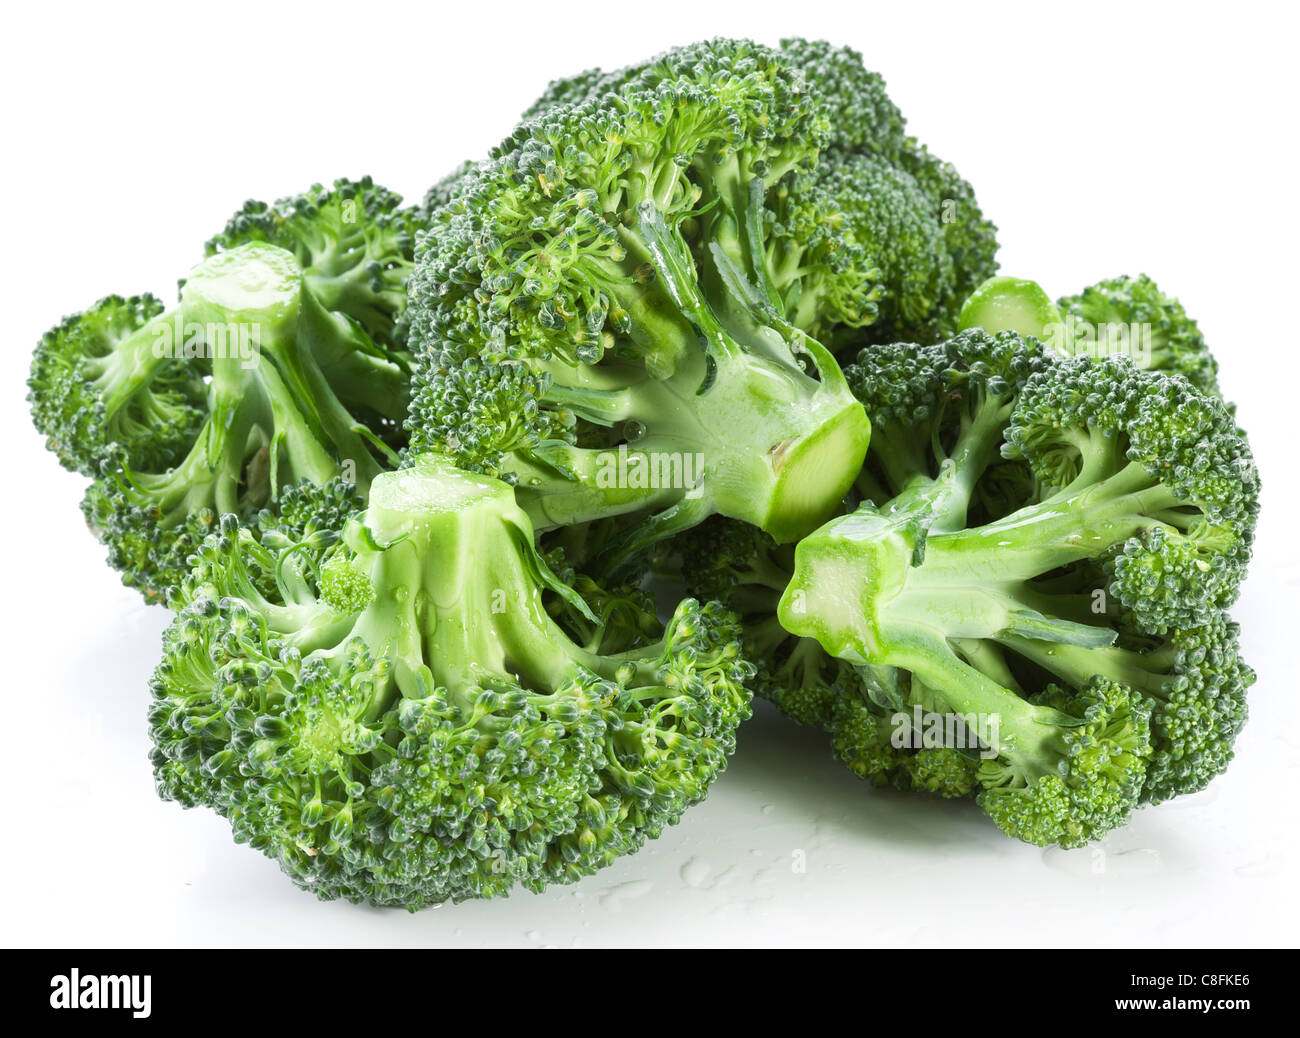 Broccoli on a white background. Stock Photo